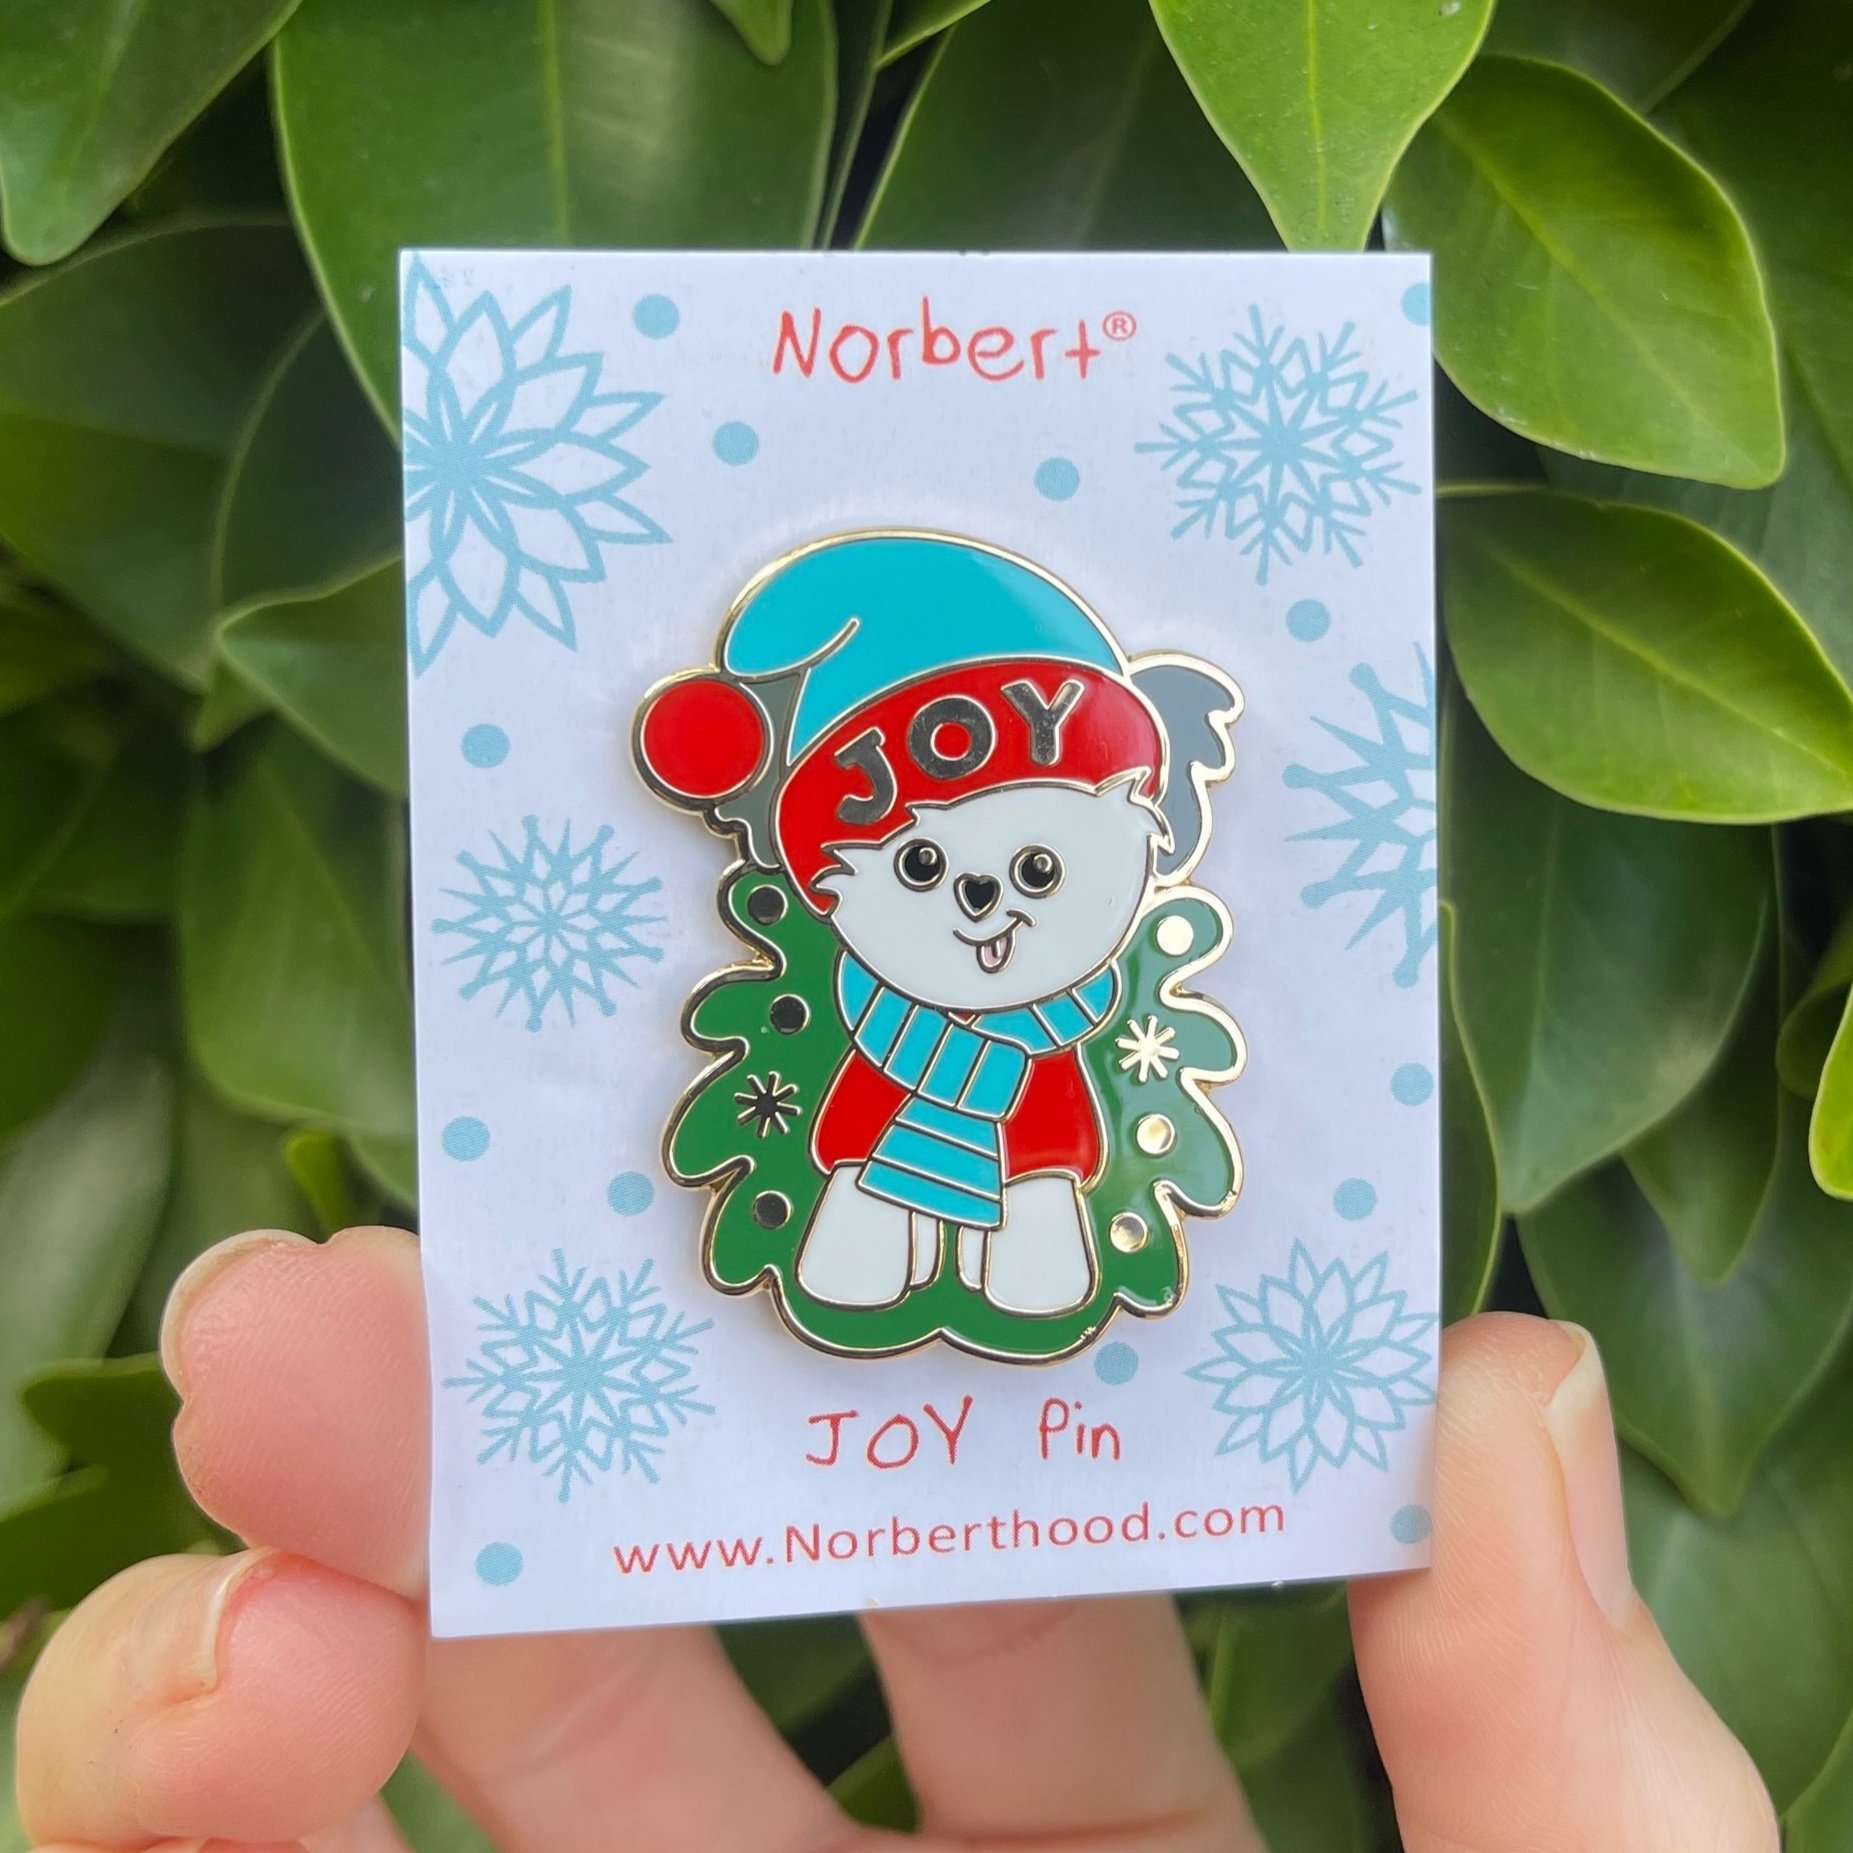 enamel pin for creatives, Christmas gift ideas